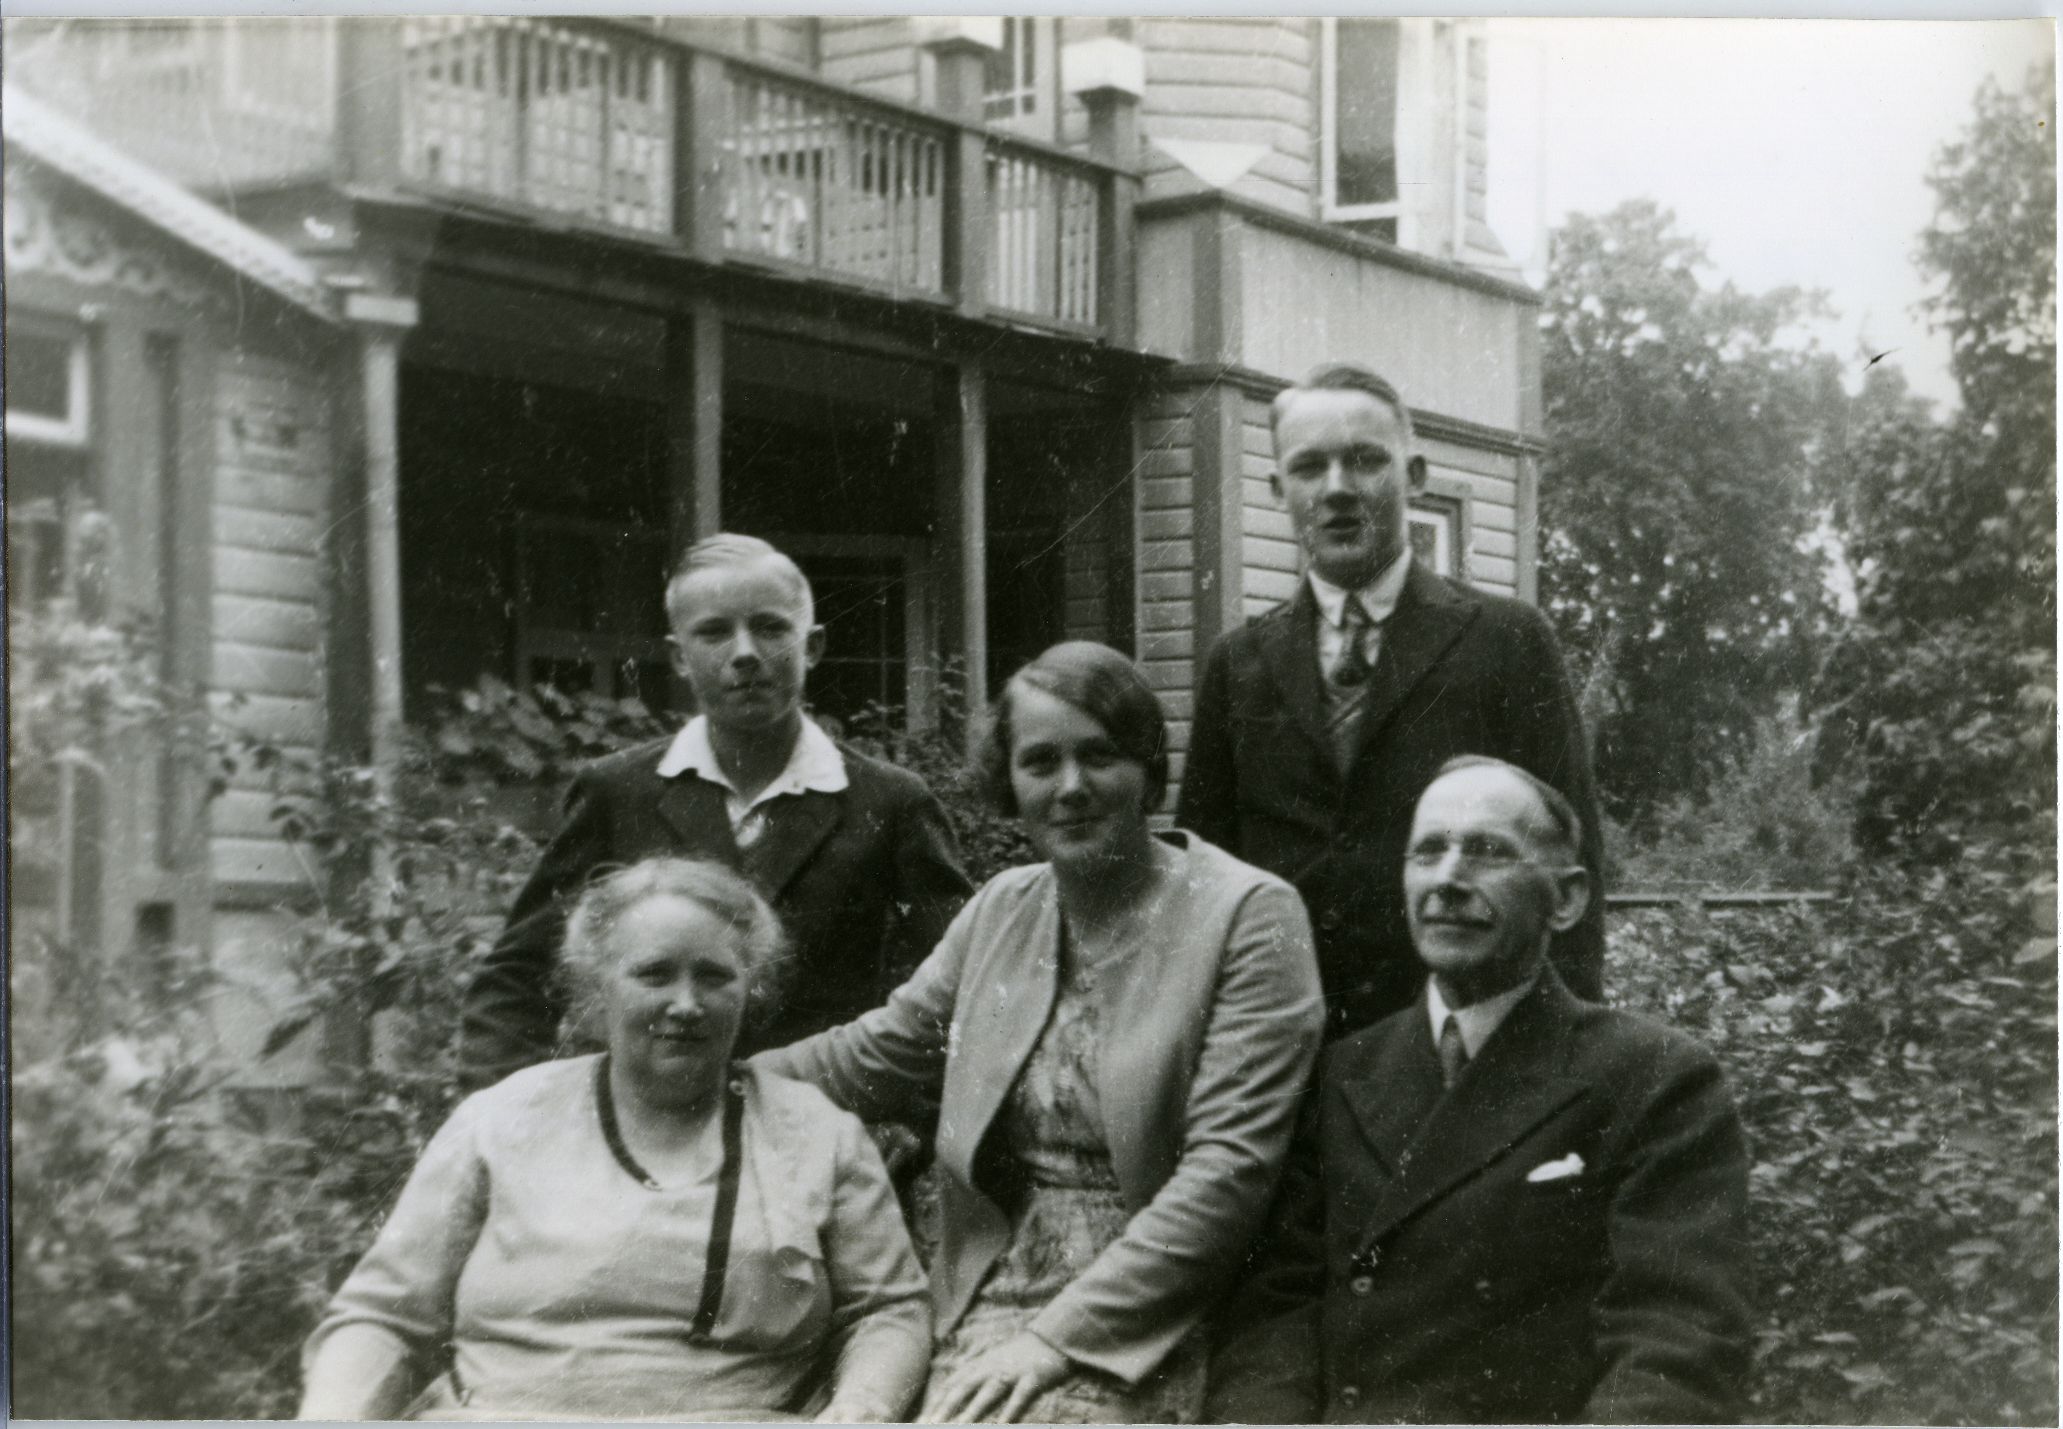 Family Waldmann's contribution to the garden in Kuressaare